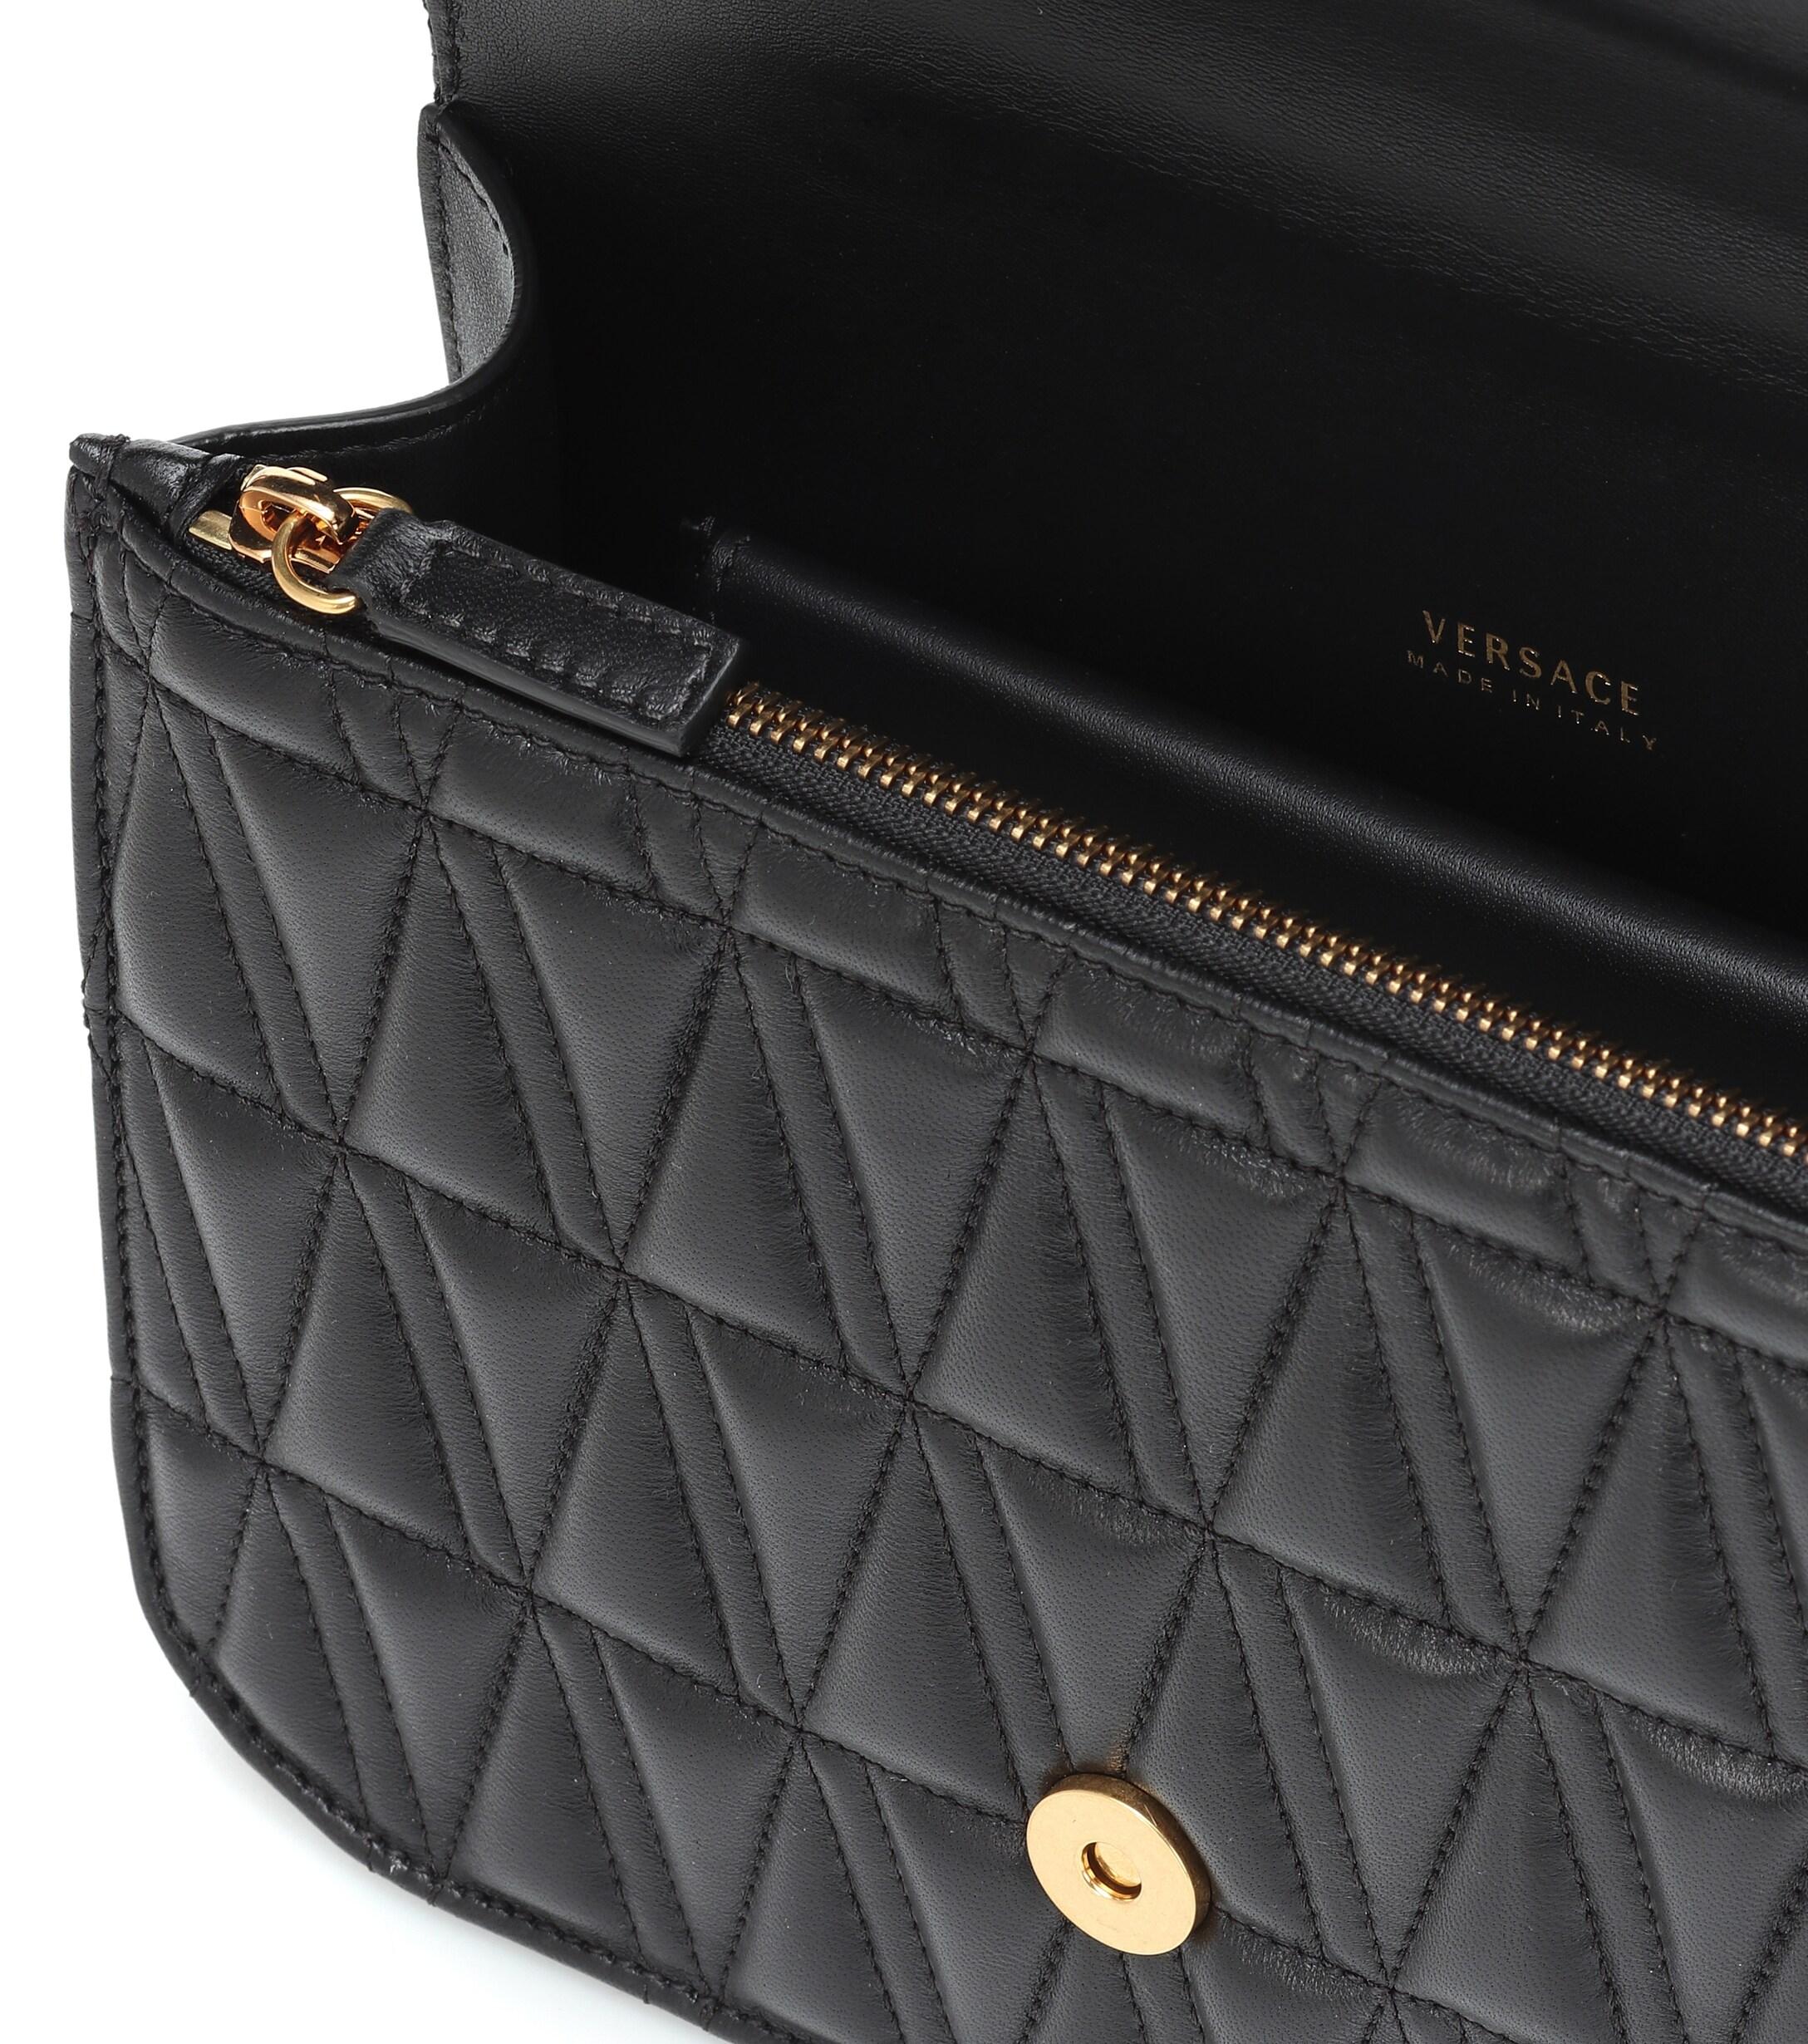 Versace Virtus Quilted Leather Shoulder Bag in Black - Lyst